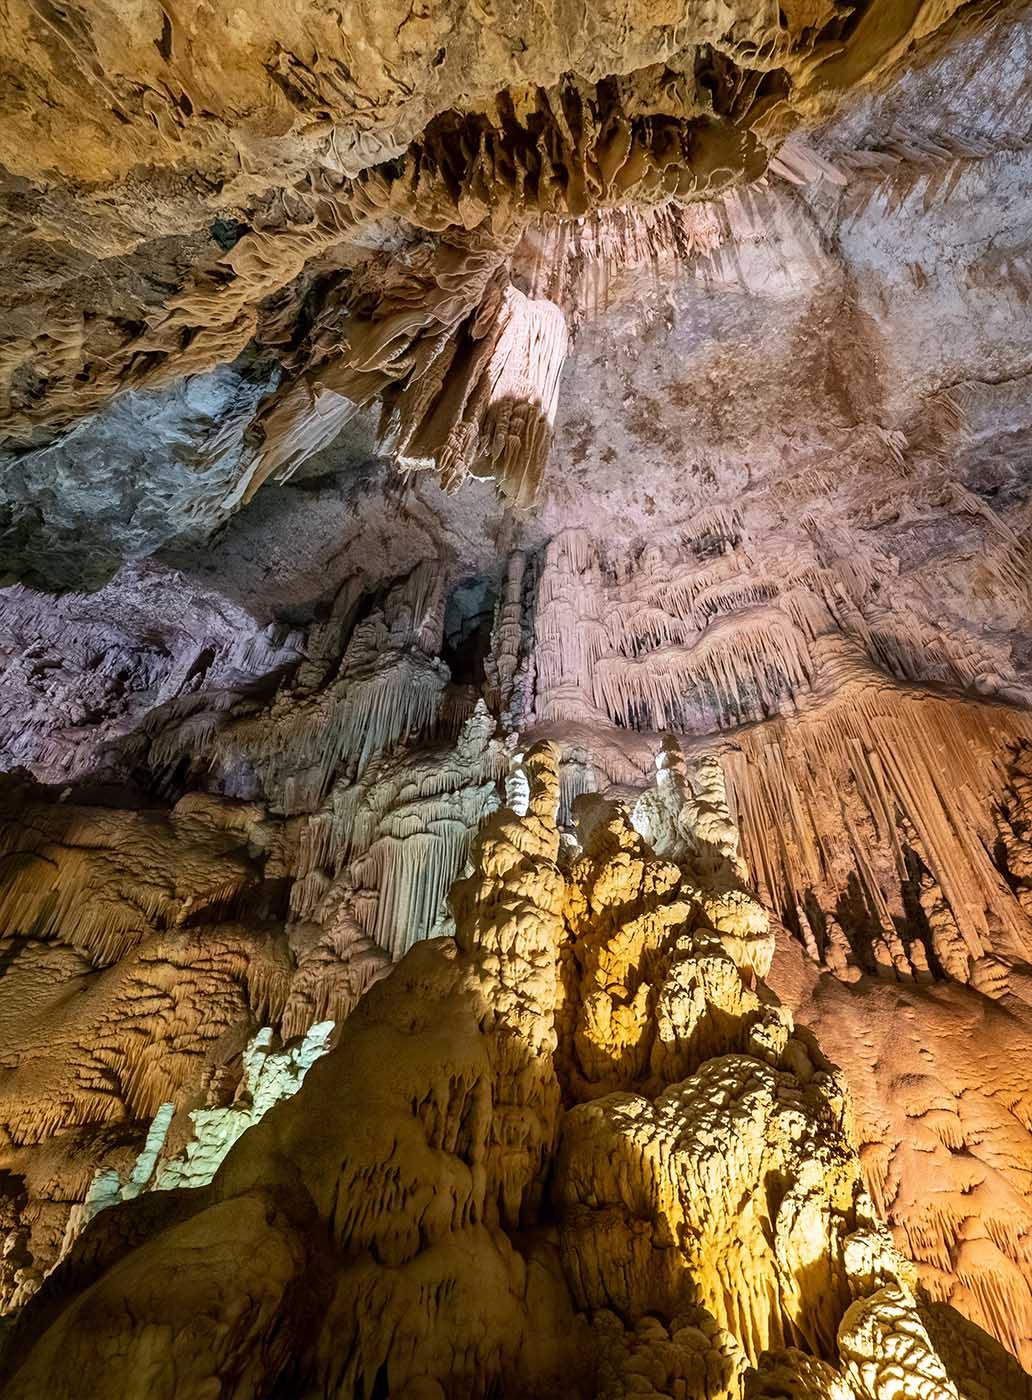 Spectacular geological formations adorn the cave interior. (Florian Kriechbaumer/Shutterstock)